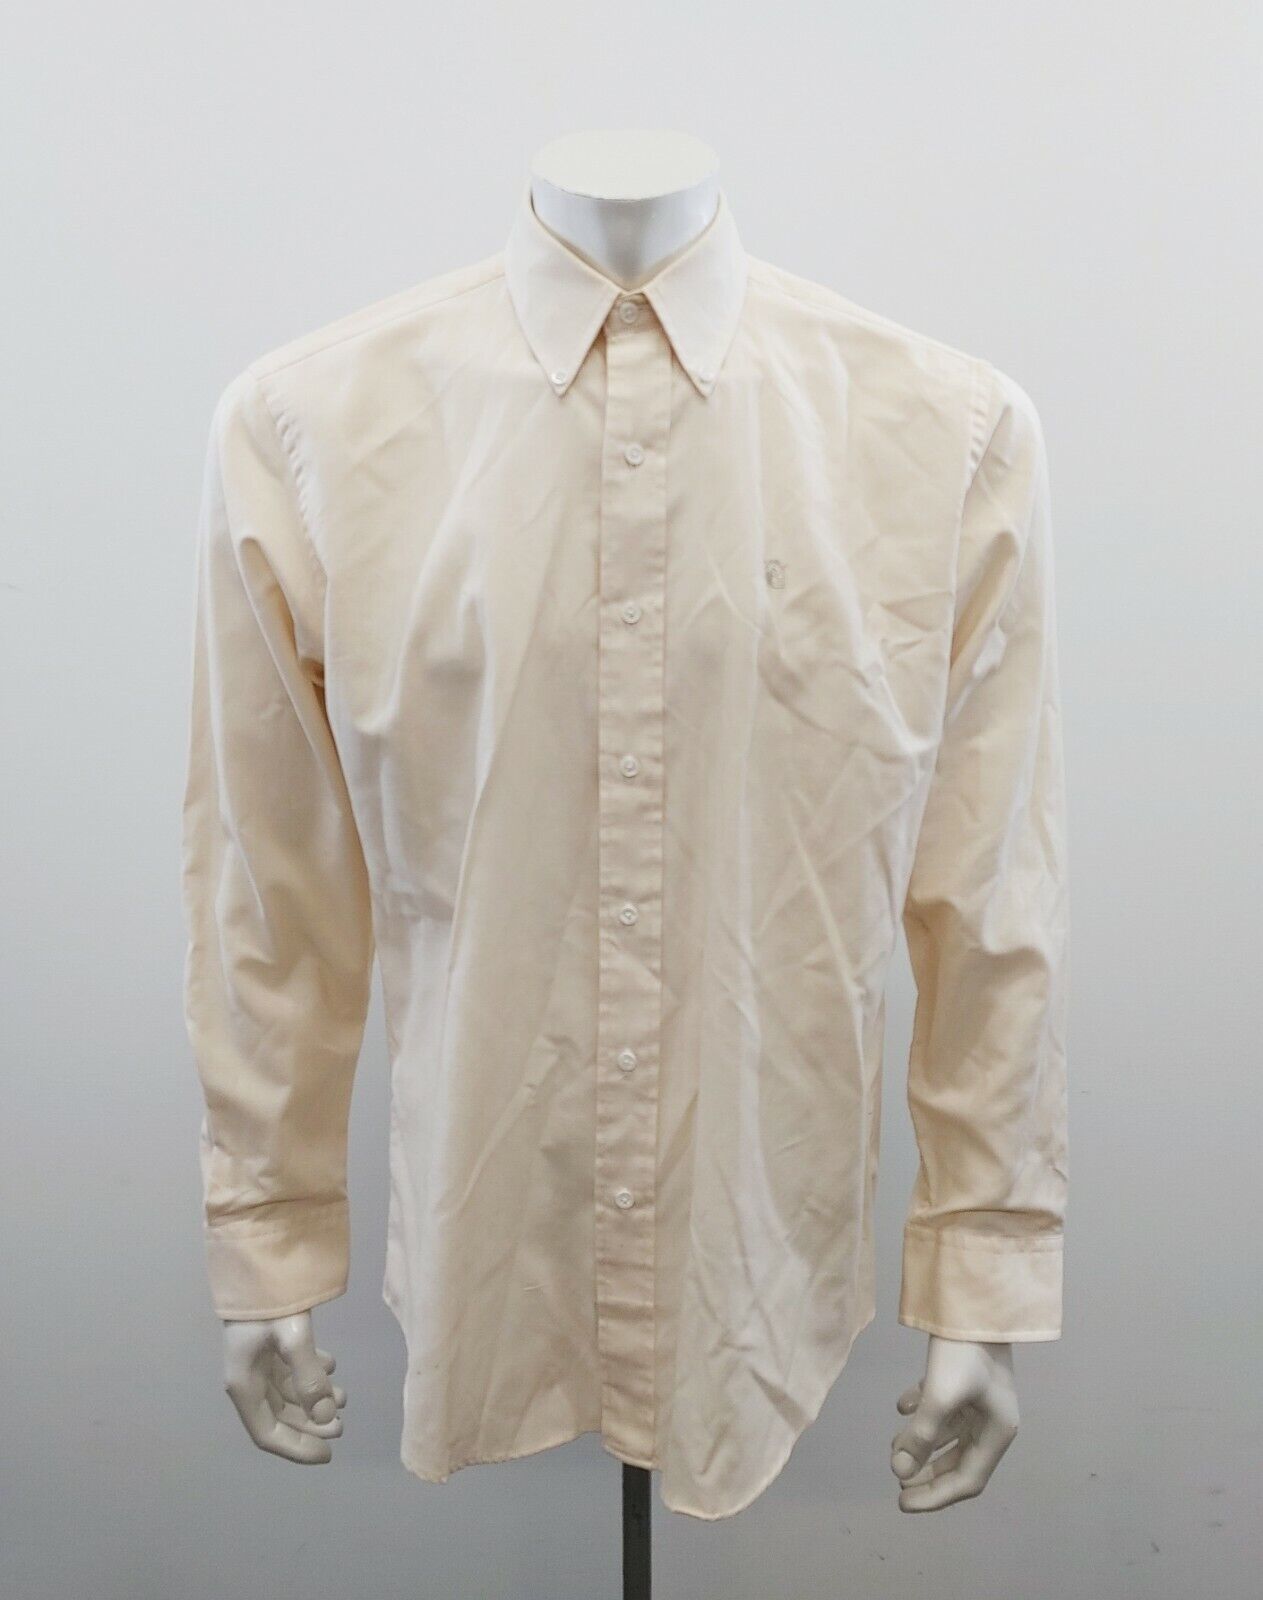 Primary image for Chaps Ralph Lauren Vintage Button Up Dress Shirt Size 16.5 Beige Cotton Blend